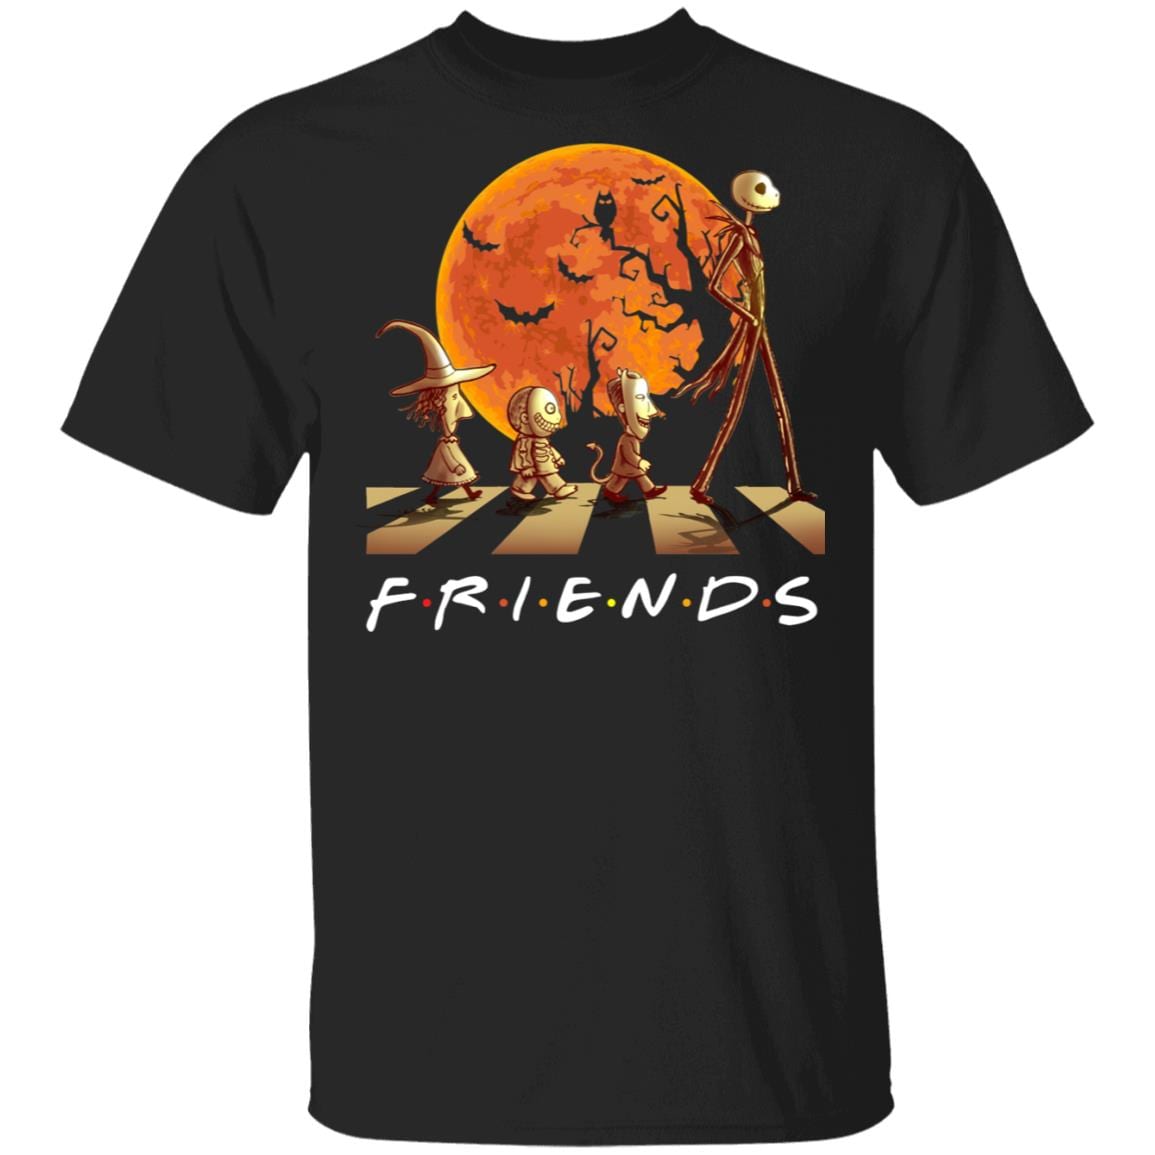 Friends Nightmare T-shirt and Hoodie 0823